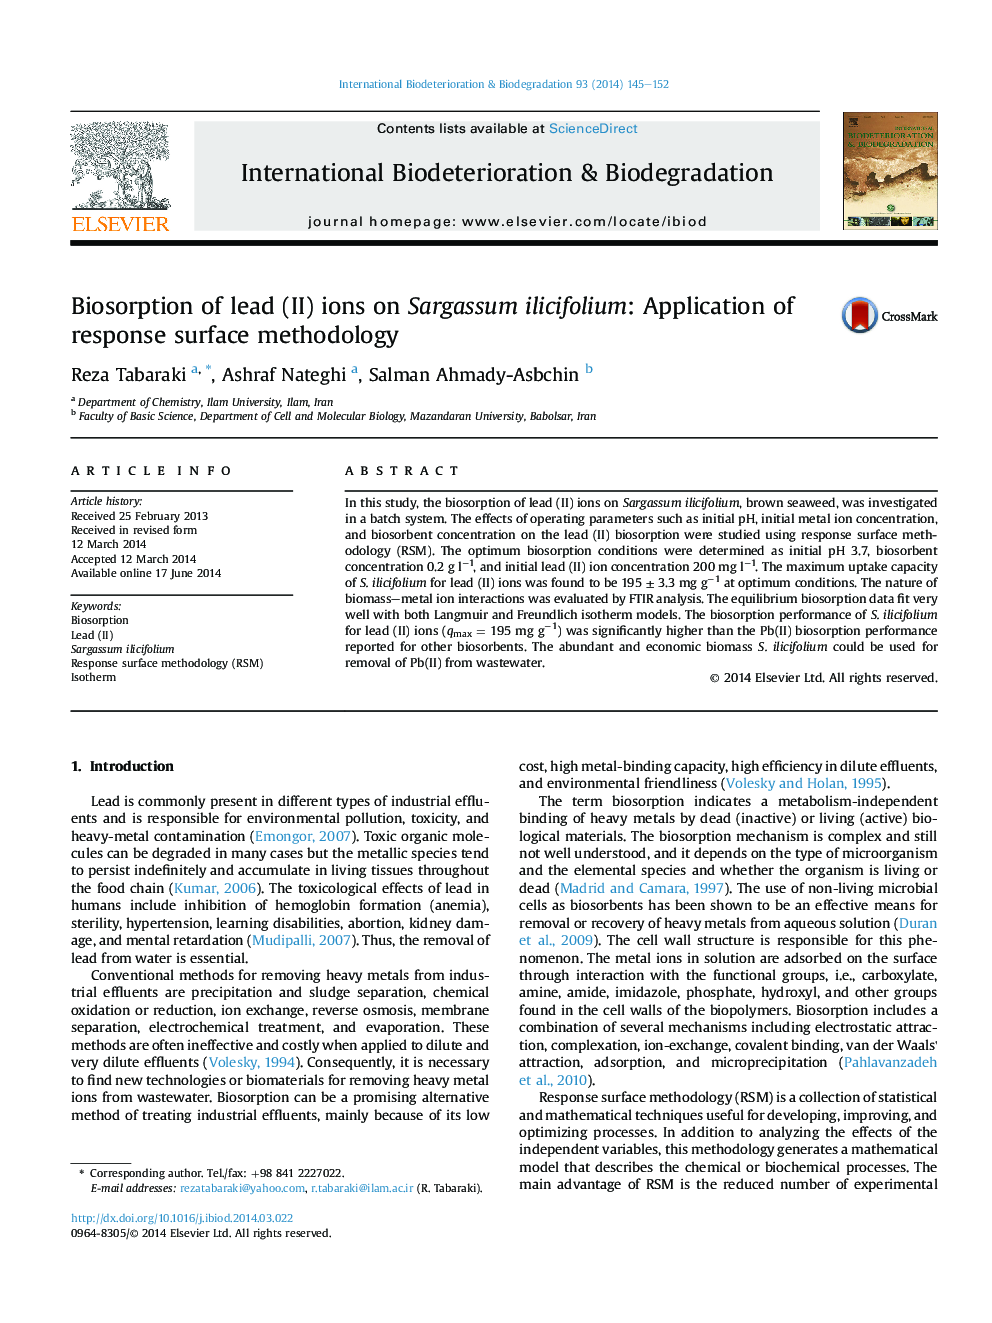 Biosorption of lead (II) ions on Sargassum ilicifolium: Application of response surface methodology